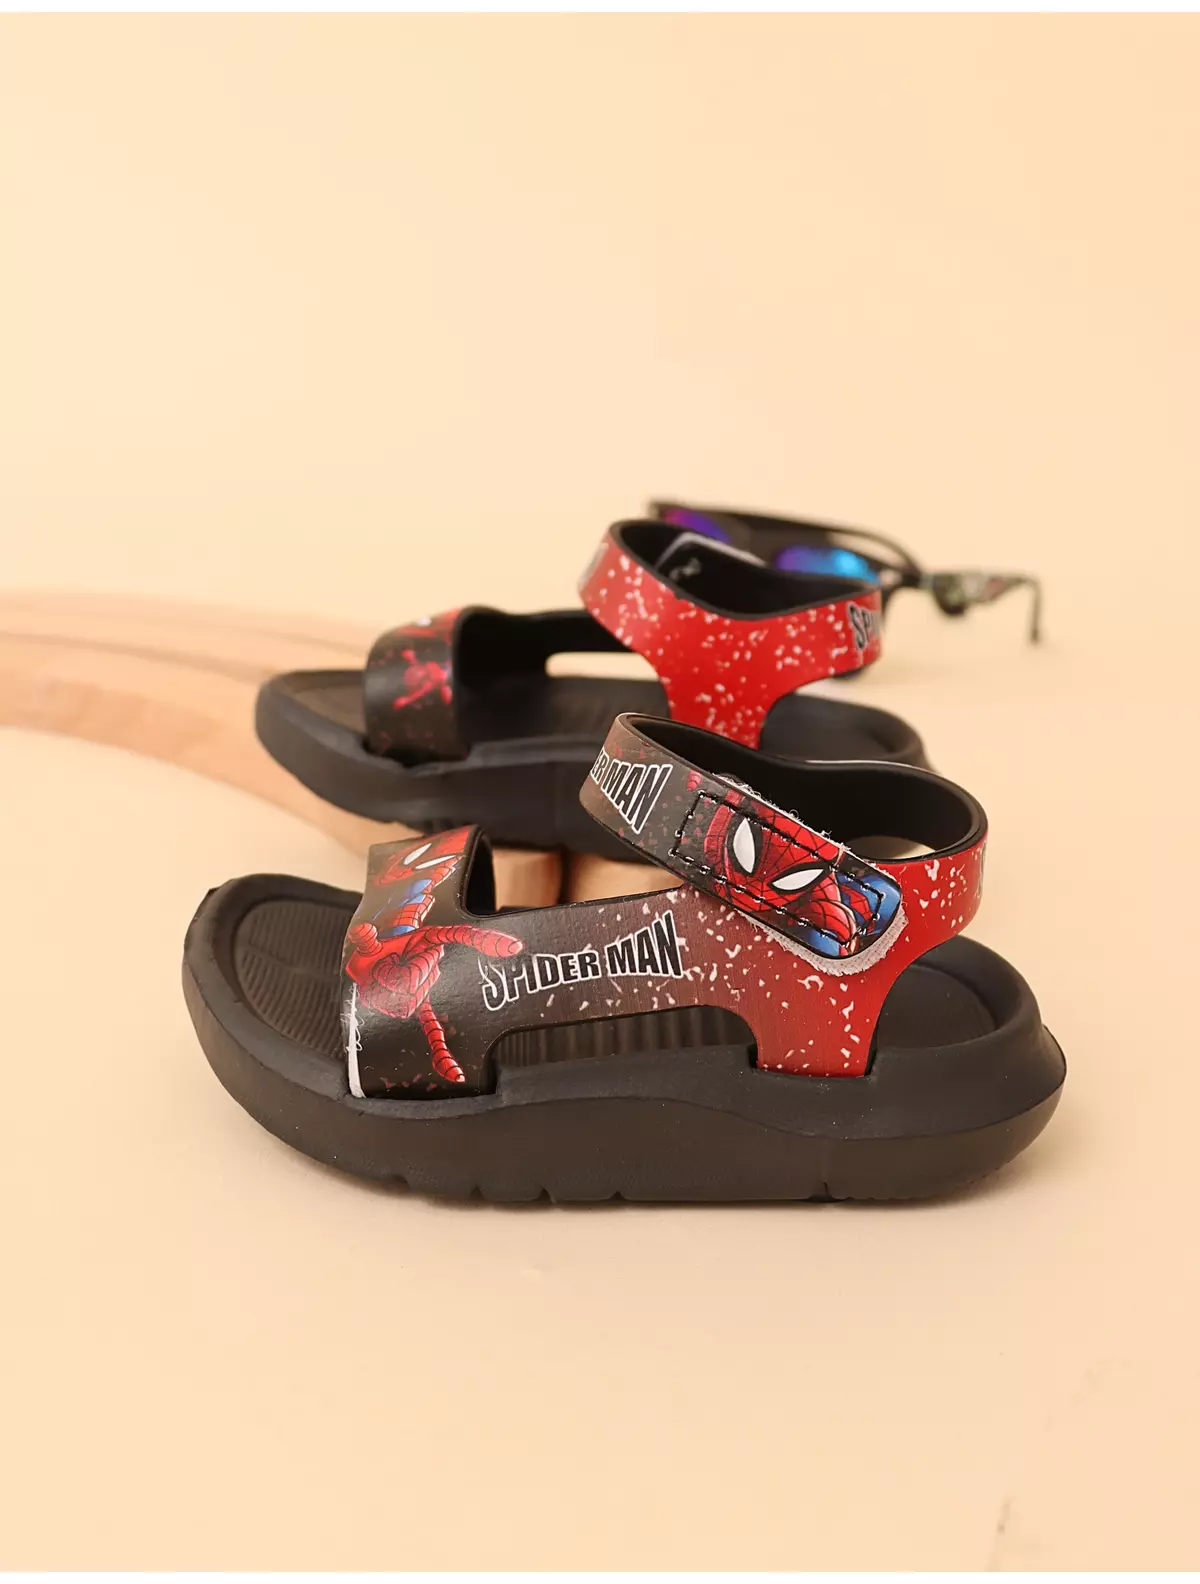 Sandale spuma spiderman negru-rosu